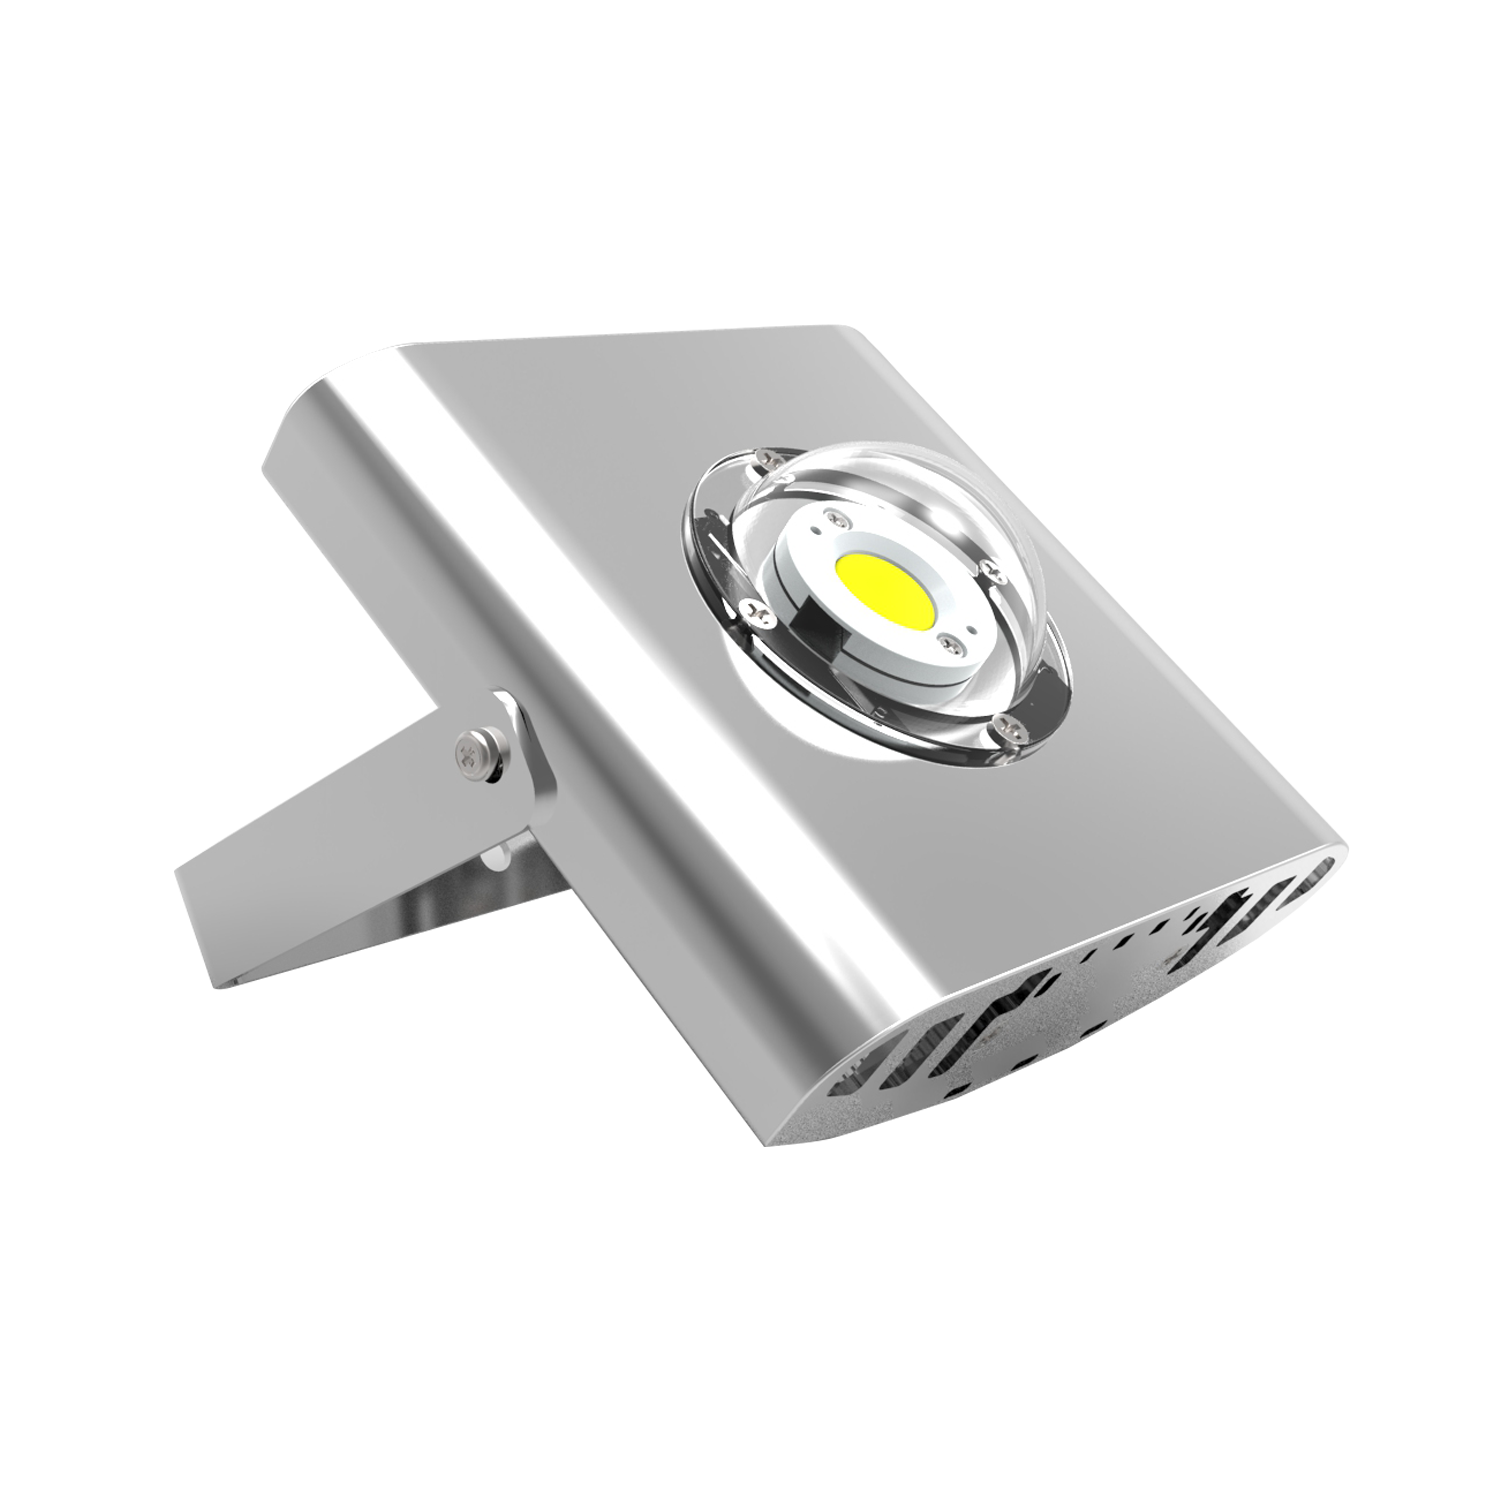 Aigostar - Confezione da 2 Faretto a LED COB，30W, 2700LM，Impermeabile IP65, Luce Naturale 4000K[Classe di efficienza energetica A+]